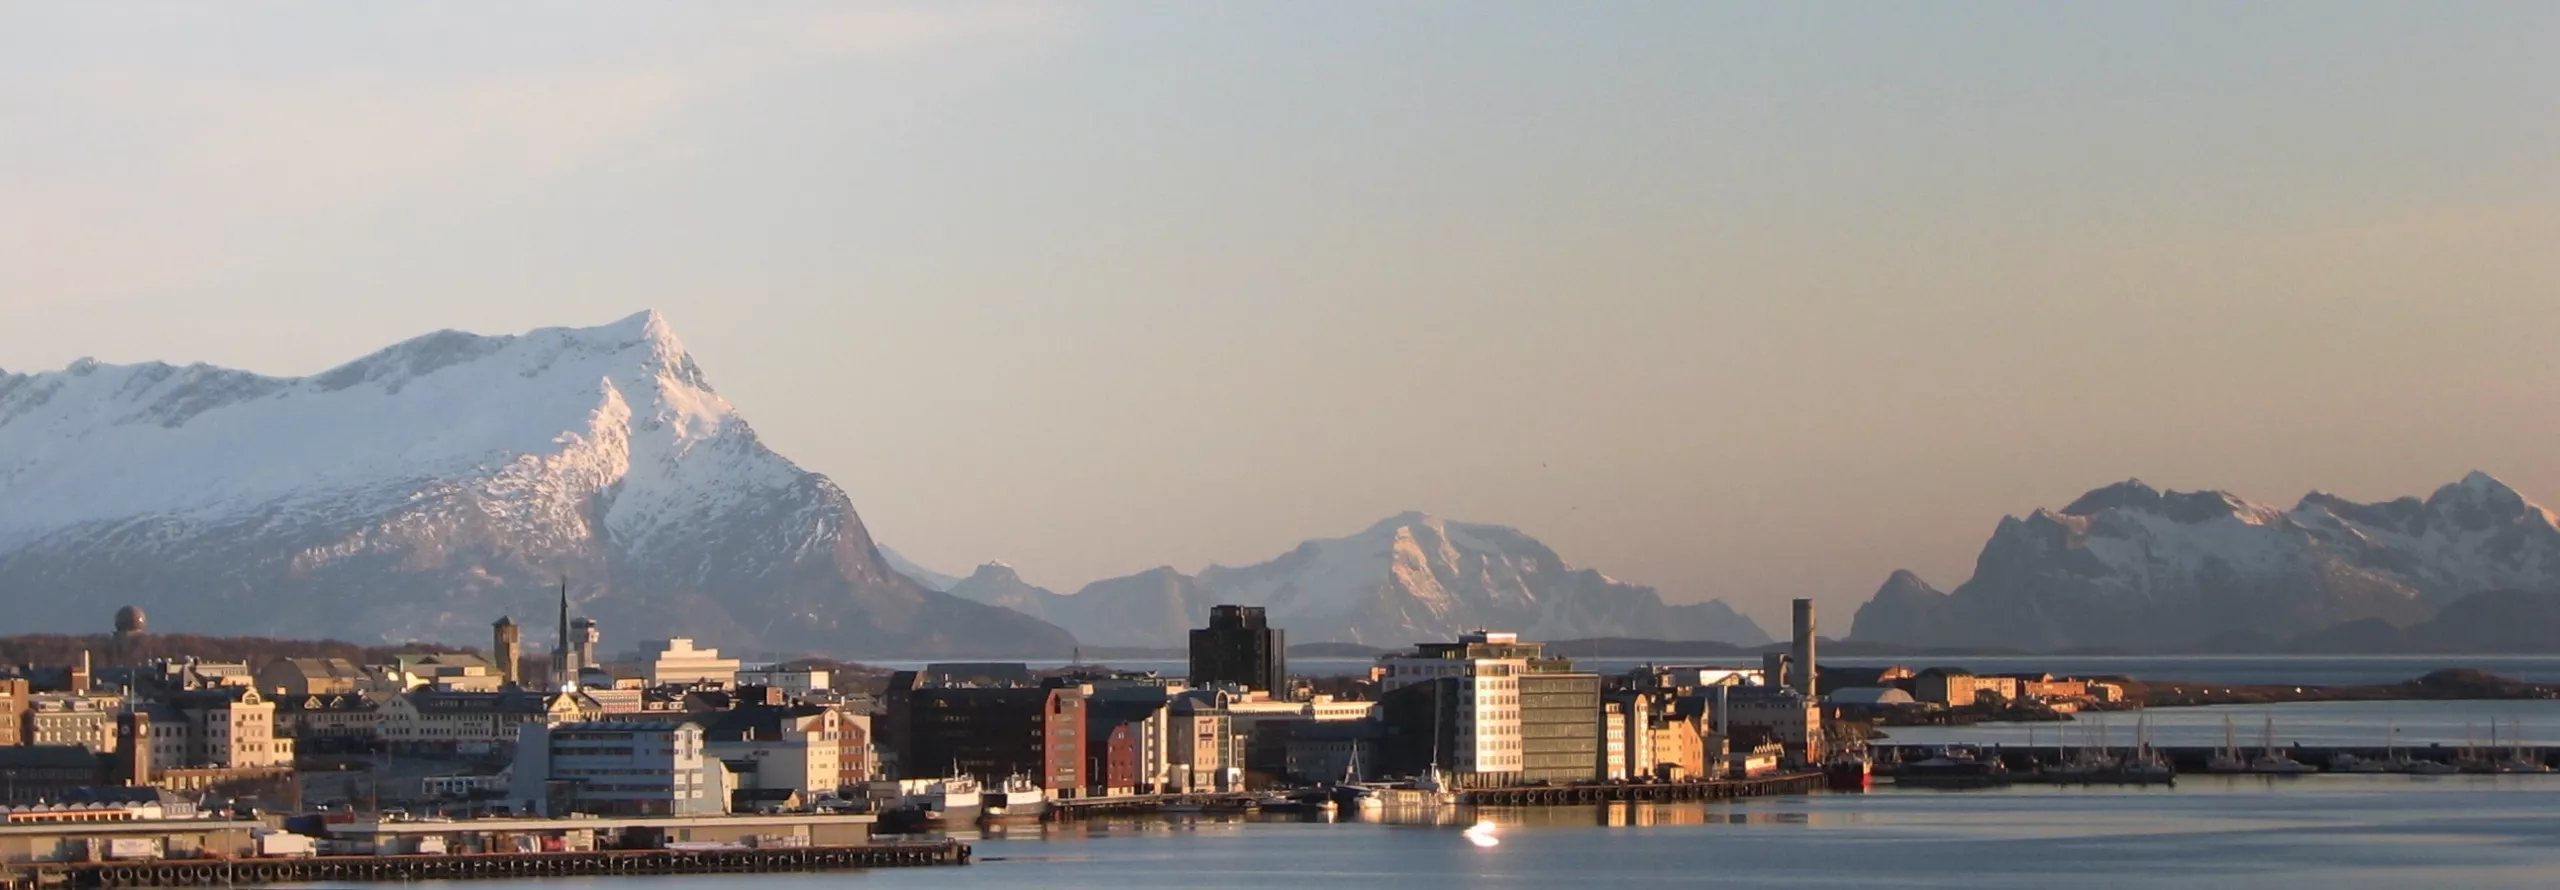 Bodø Norway, By Kefi - Own work, CC BY-SA 3.0